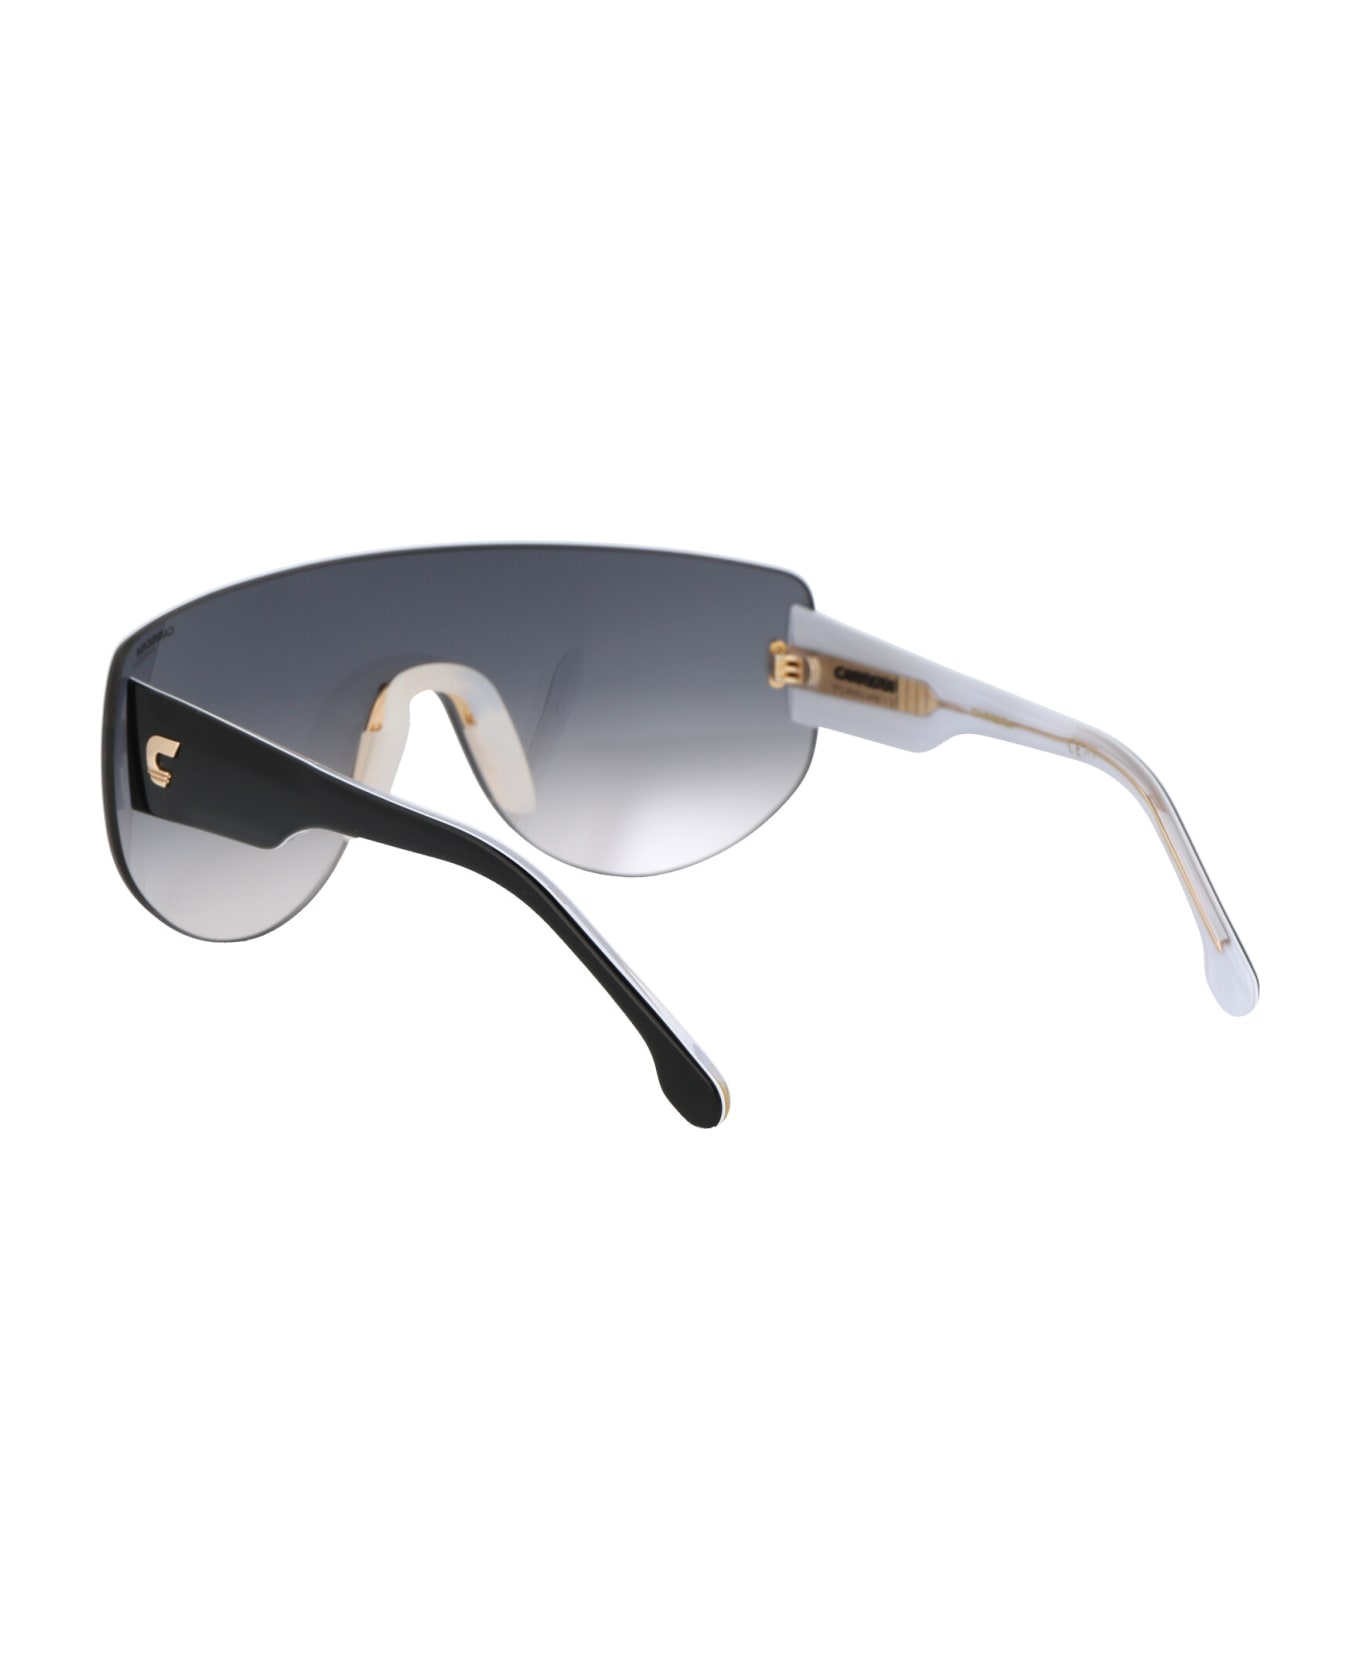 Carrera Flaglab 12 Sunglasses - 79DIC SILVER BLACK